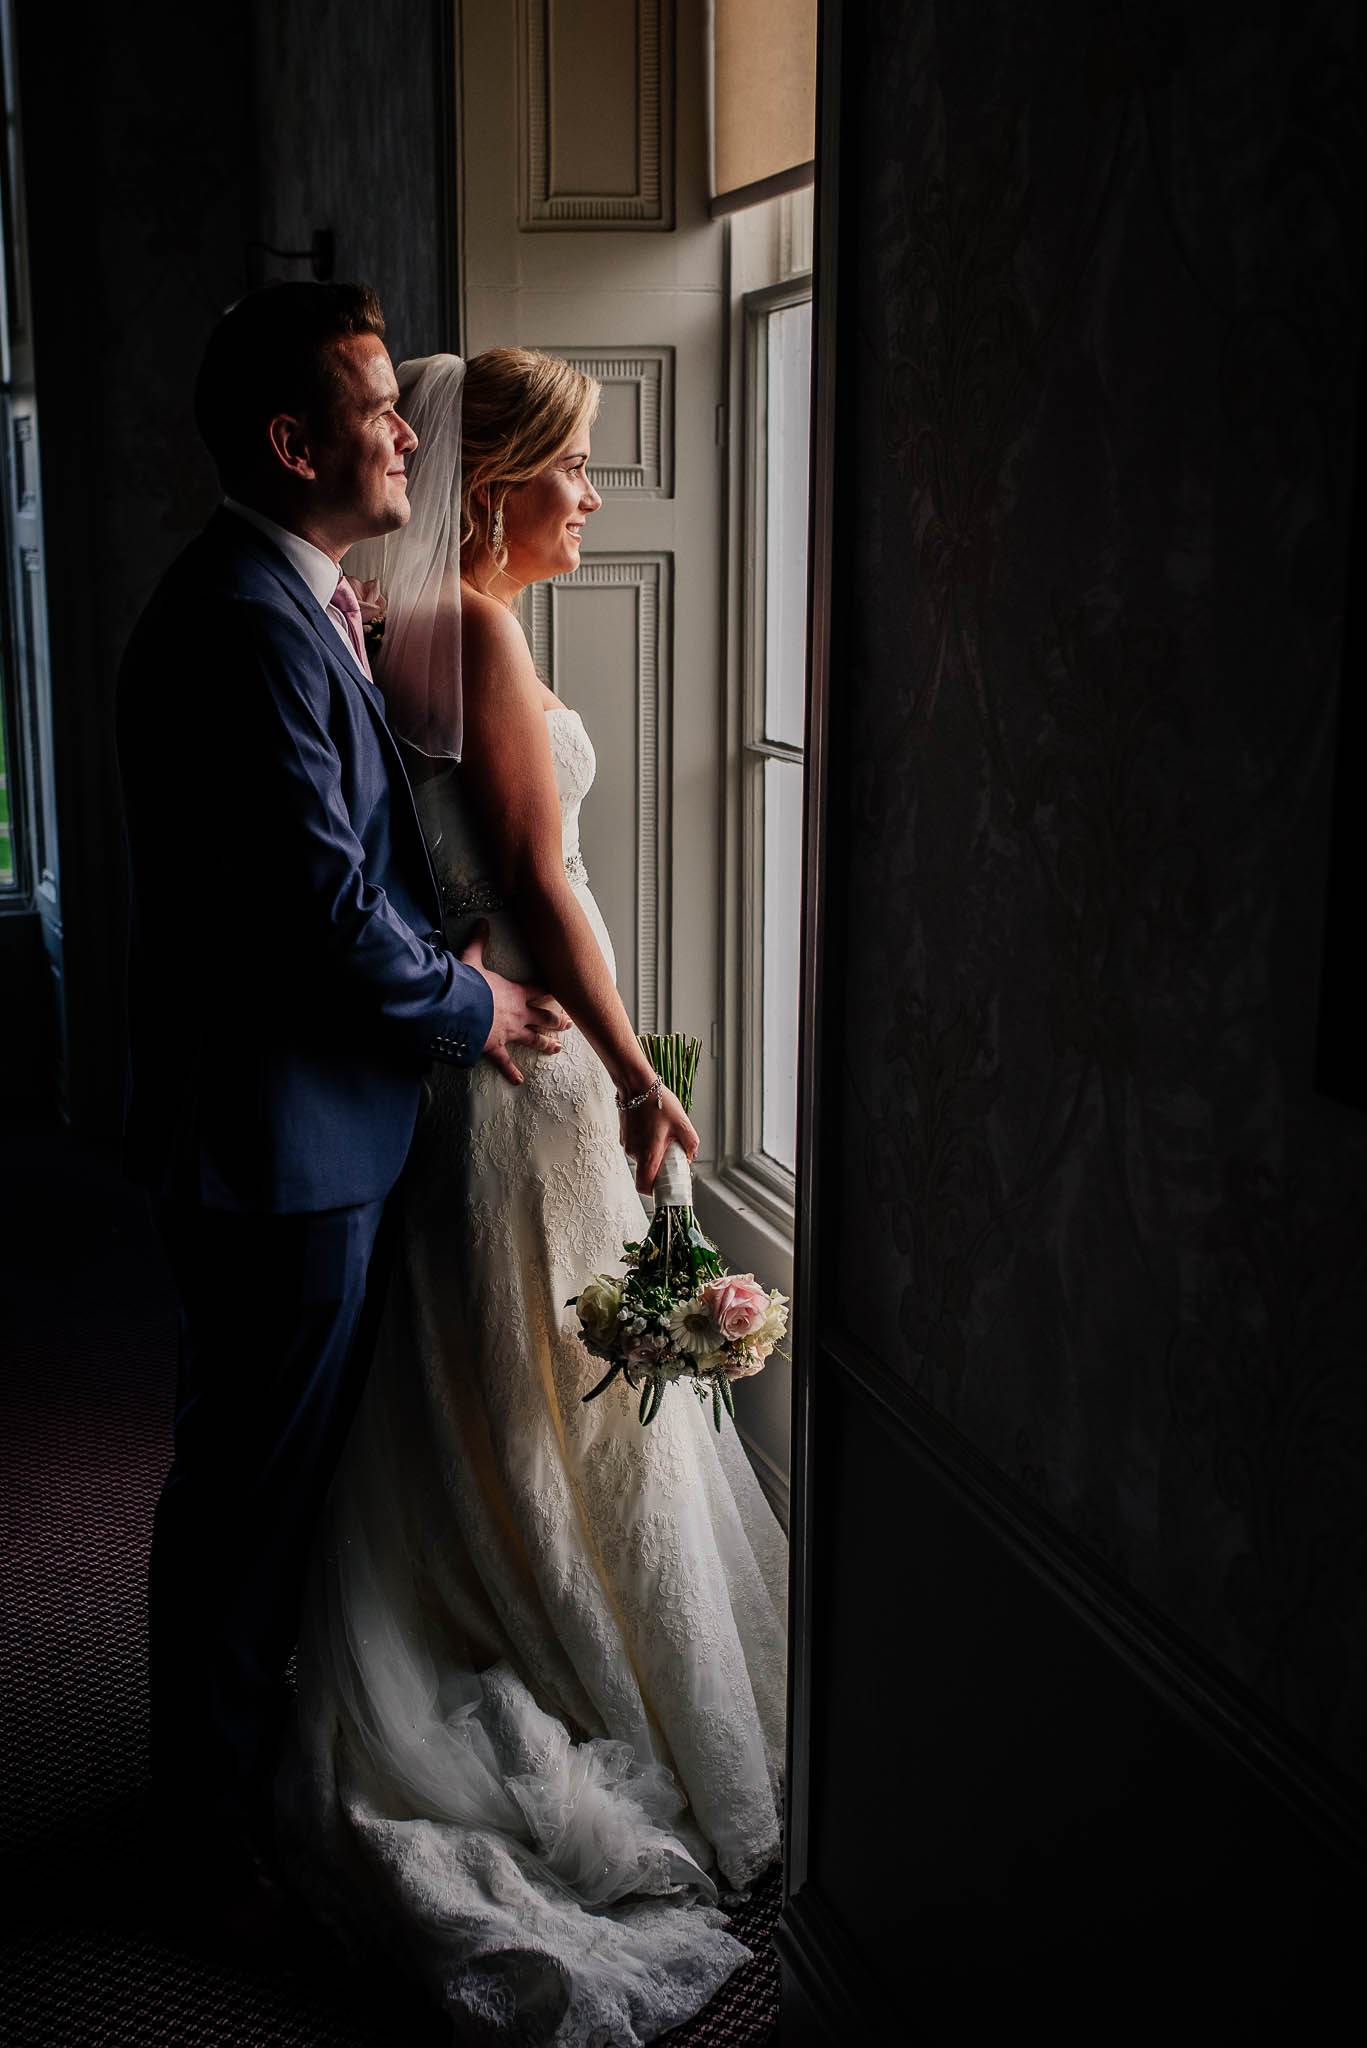 Owston Hall wedding photos inside